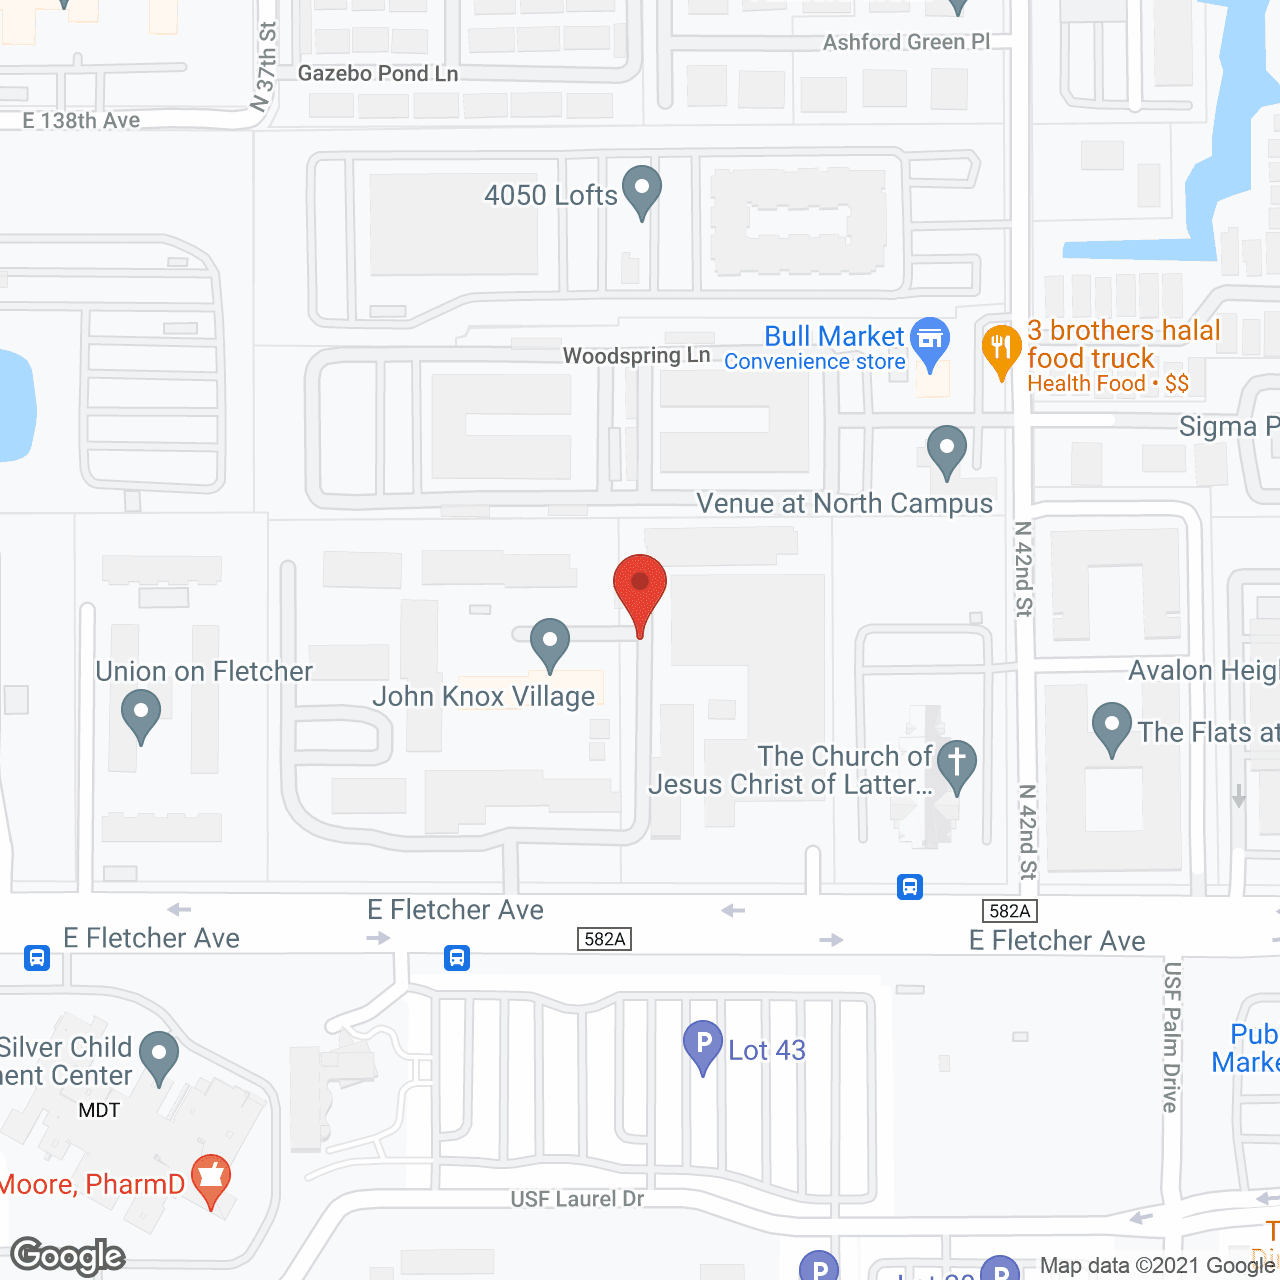 Concordia Village at Tampa in google map